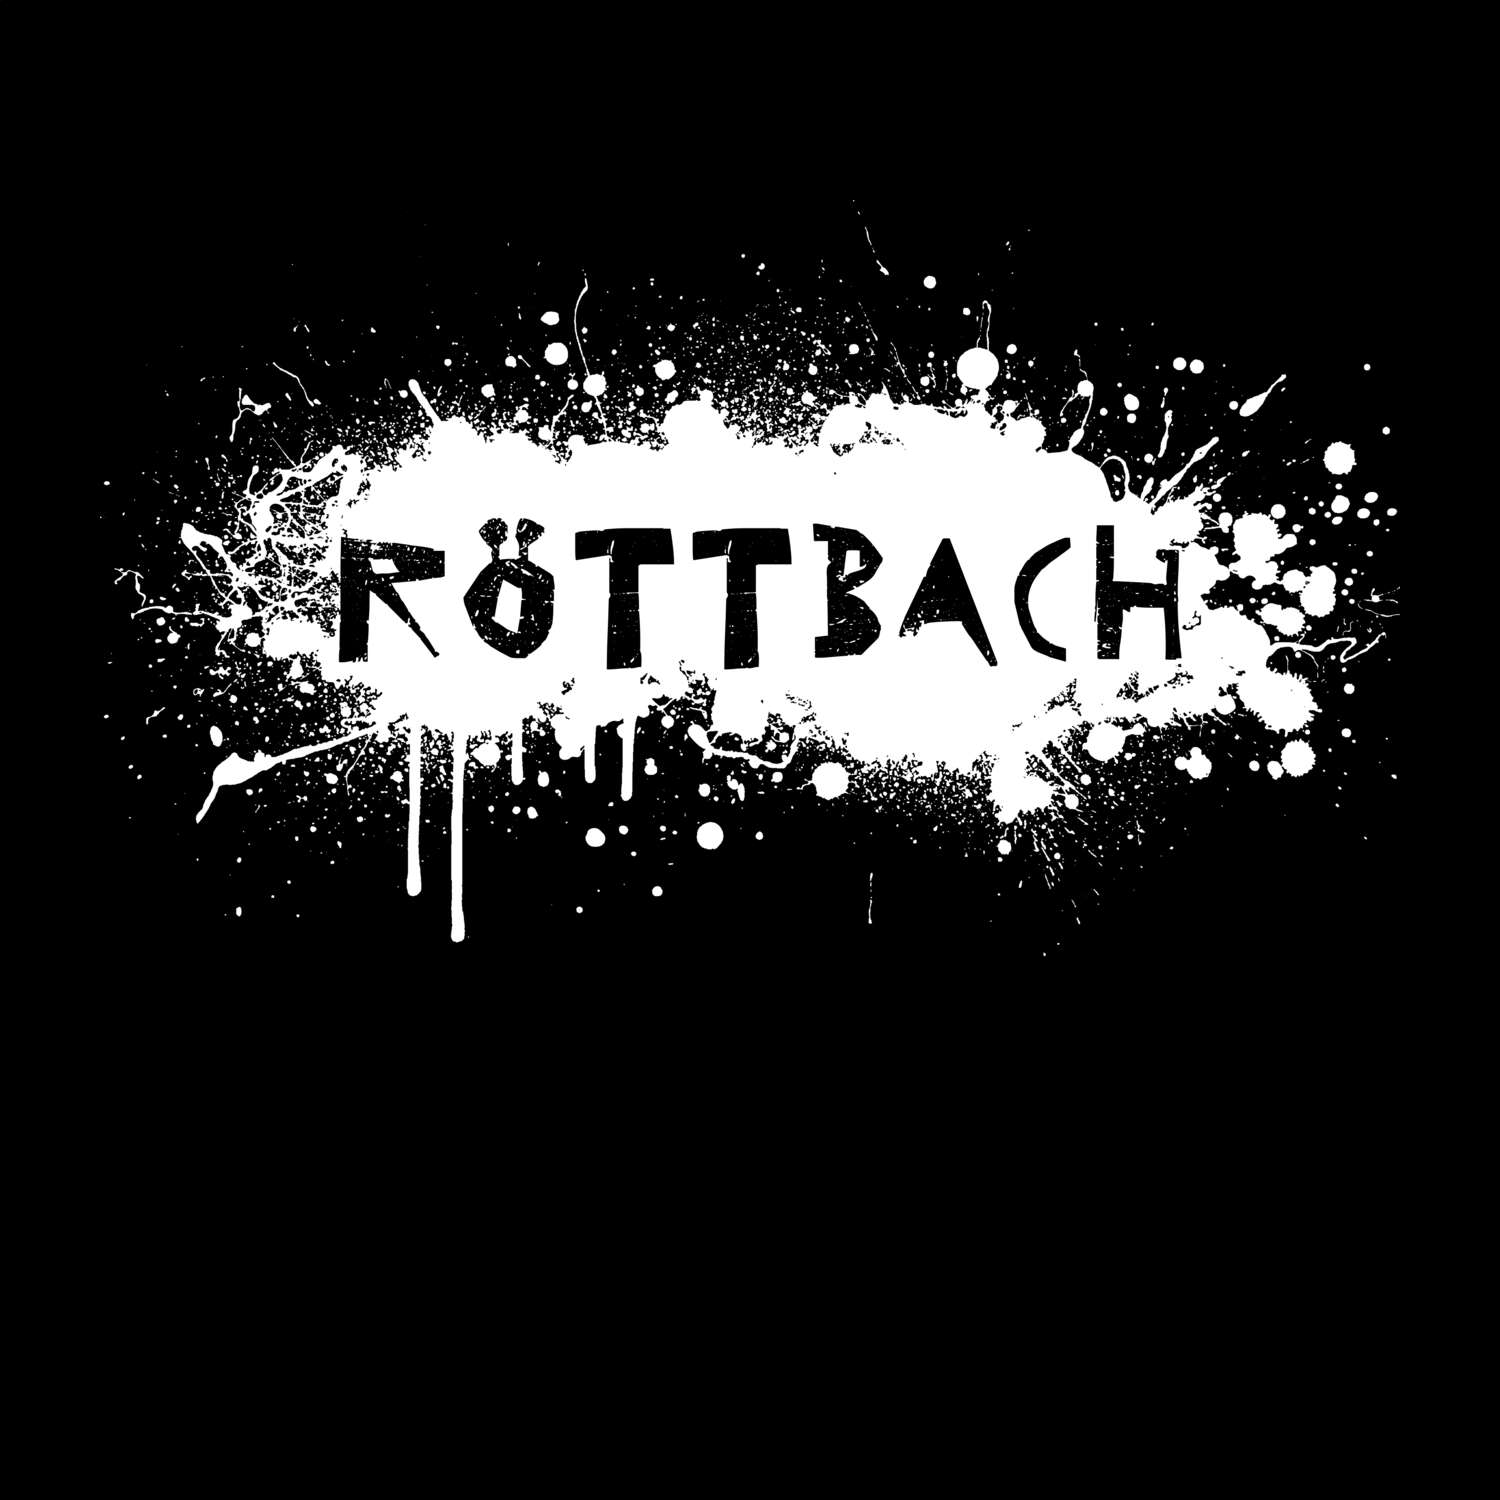 Röttbach T-Shirt »Paint Splash Punk«